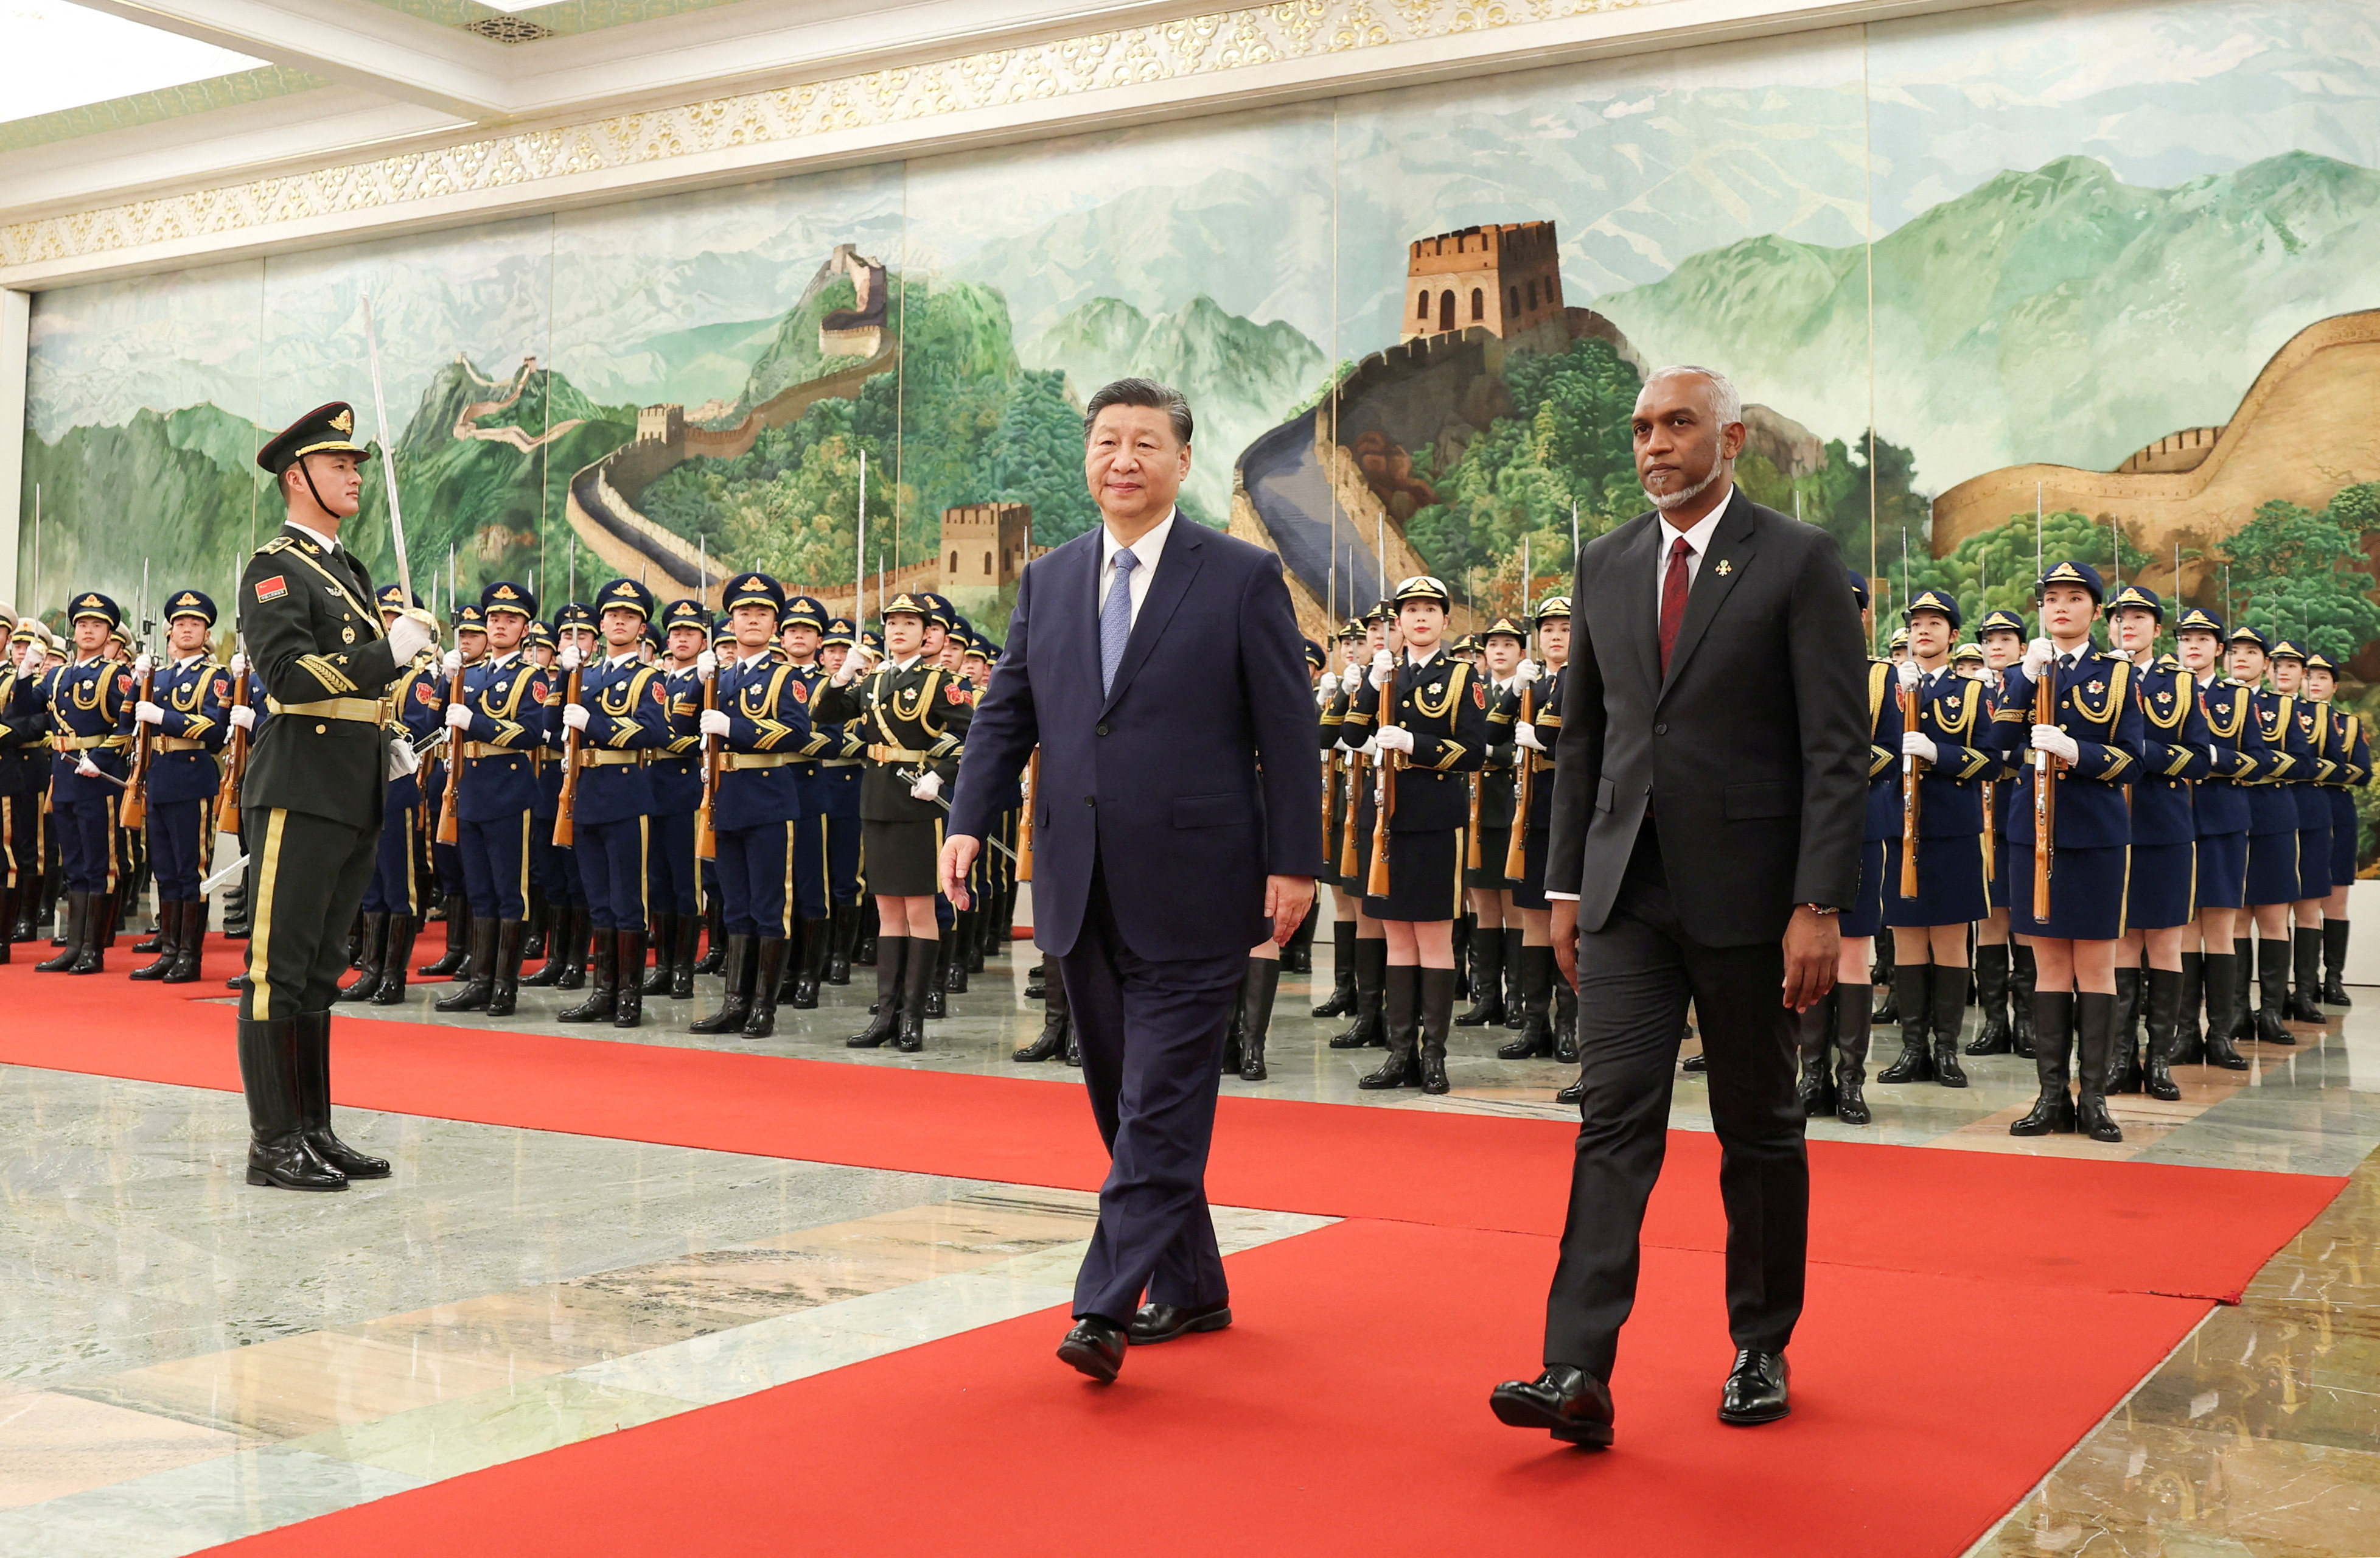 Maldives President Mohamed Muizzu visits Beijing